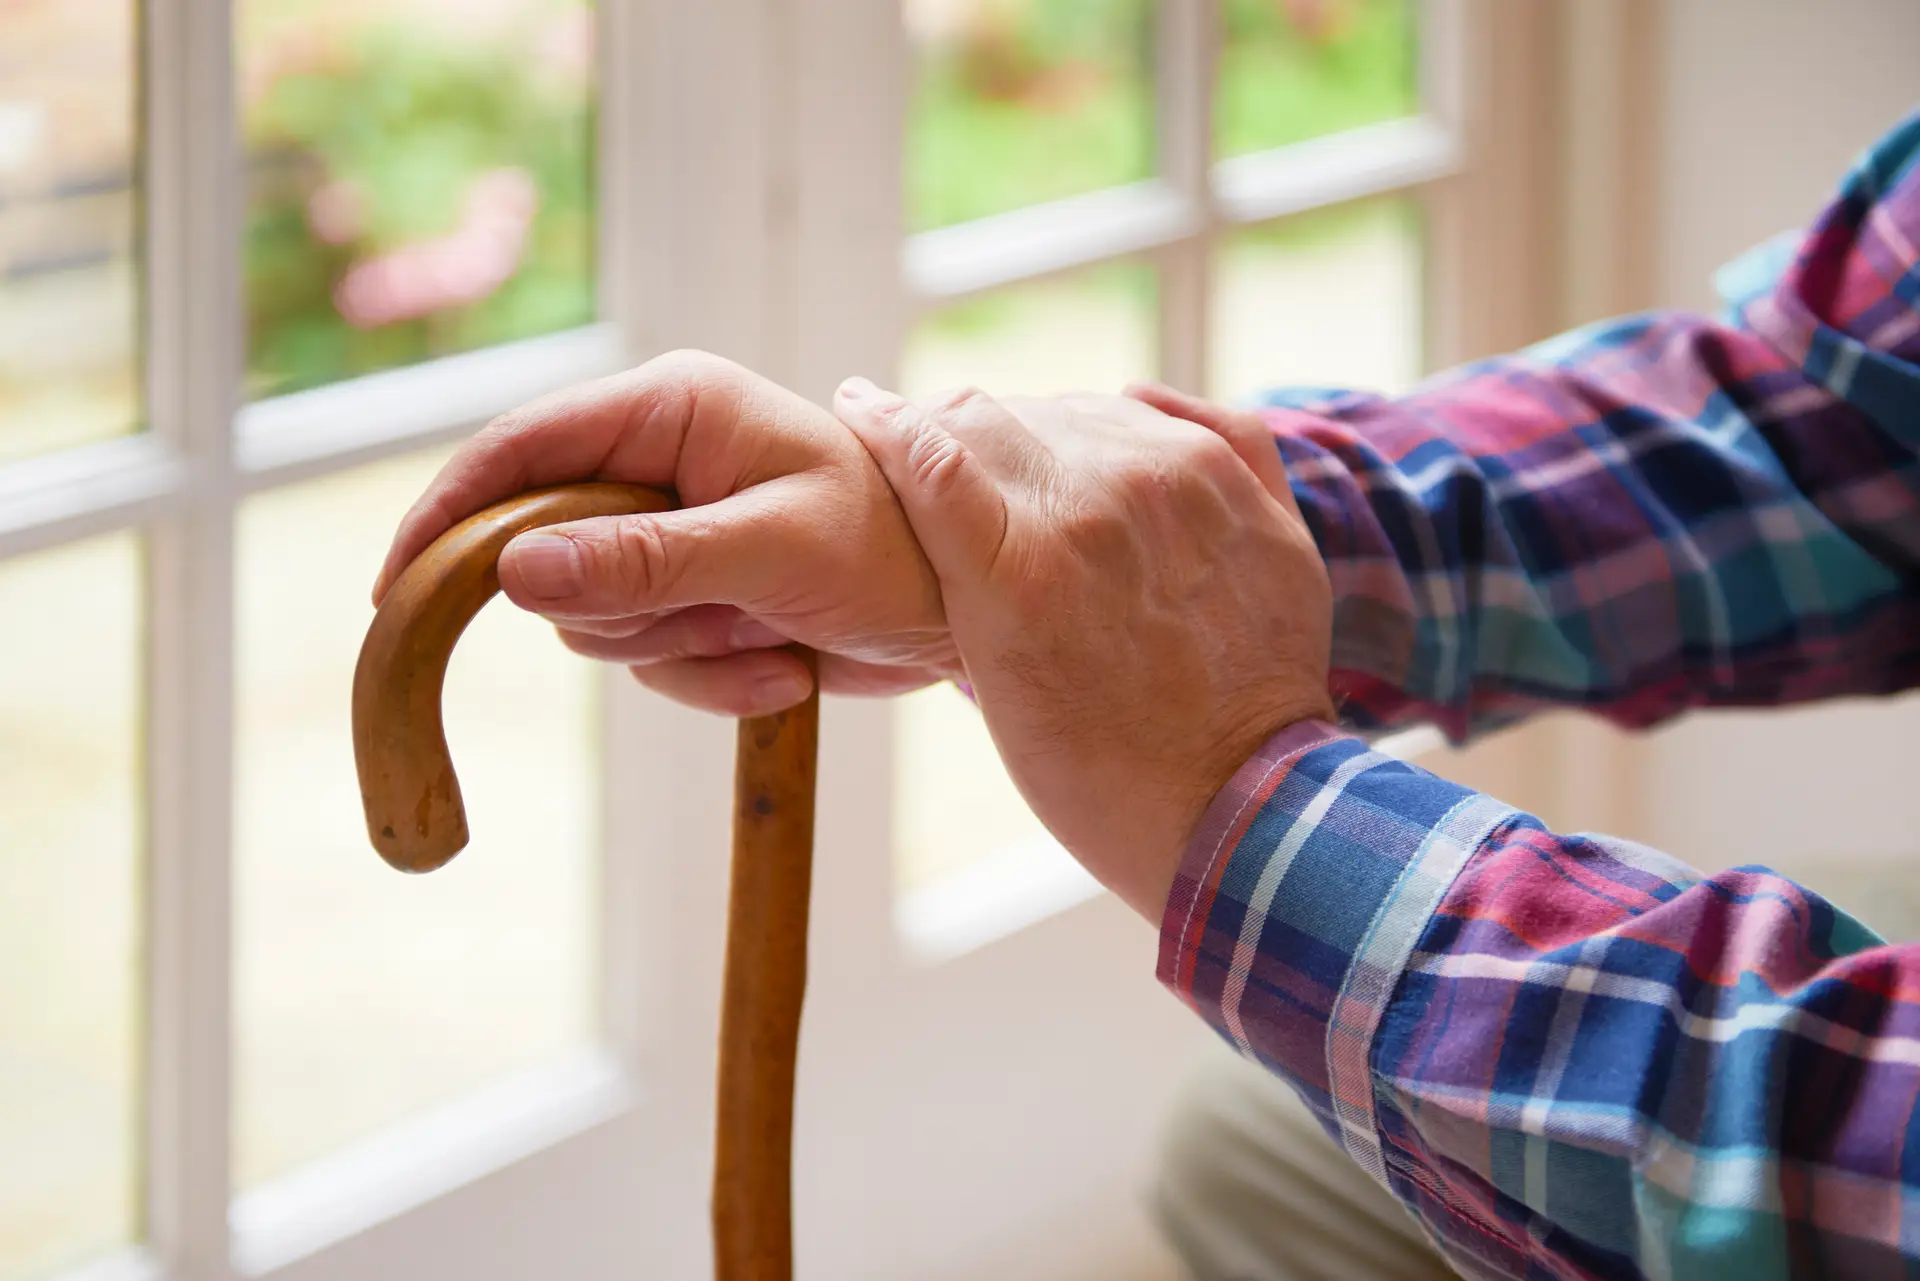 Maus-tratos a idosos: PGR abre inquérito ao lar da Lourinhã